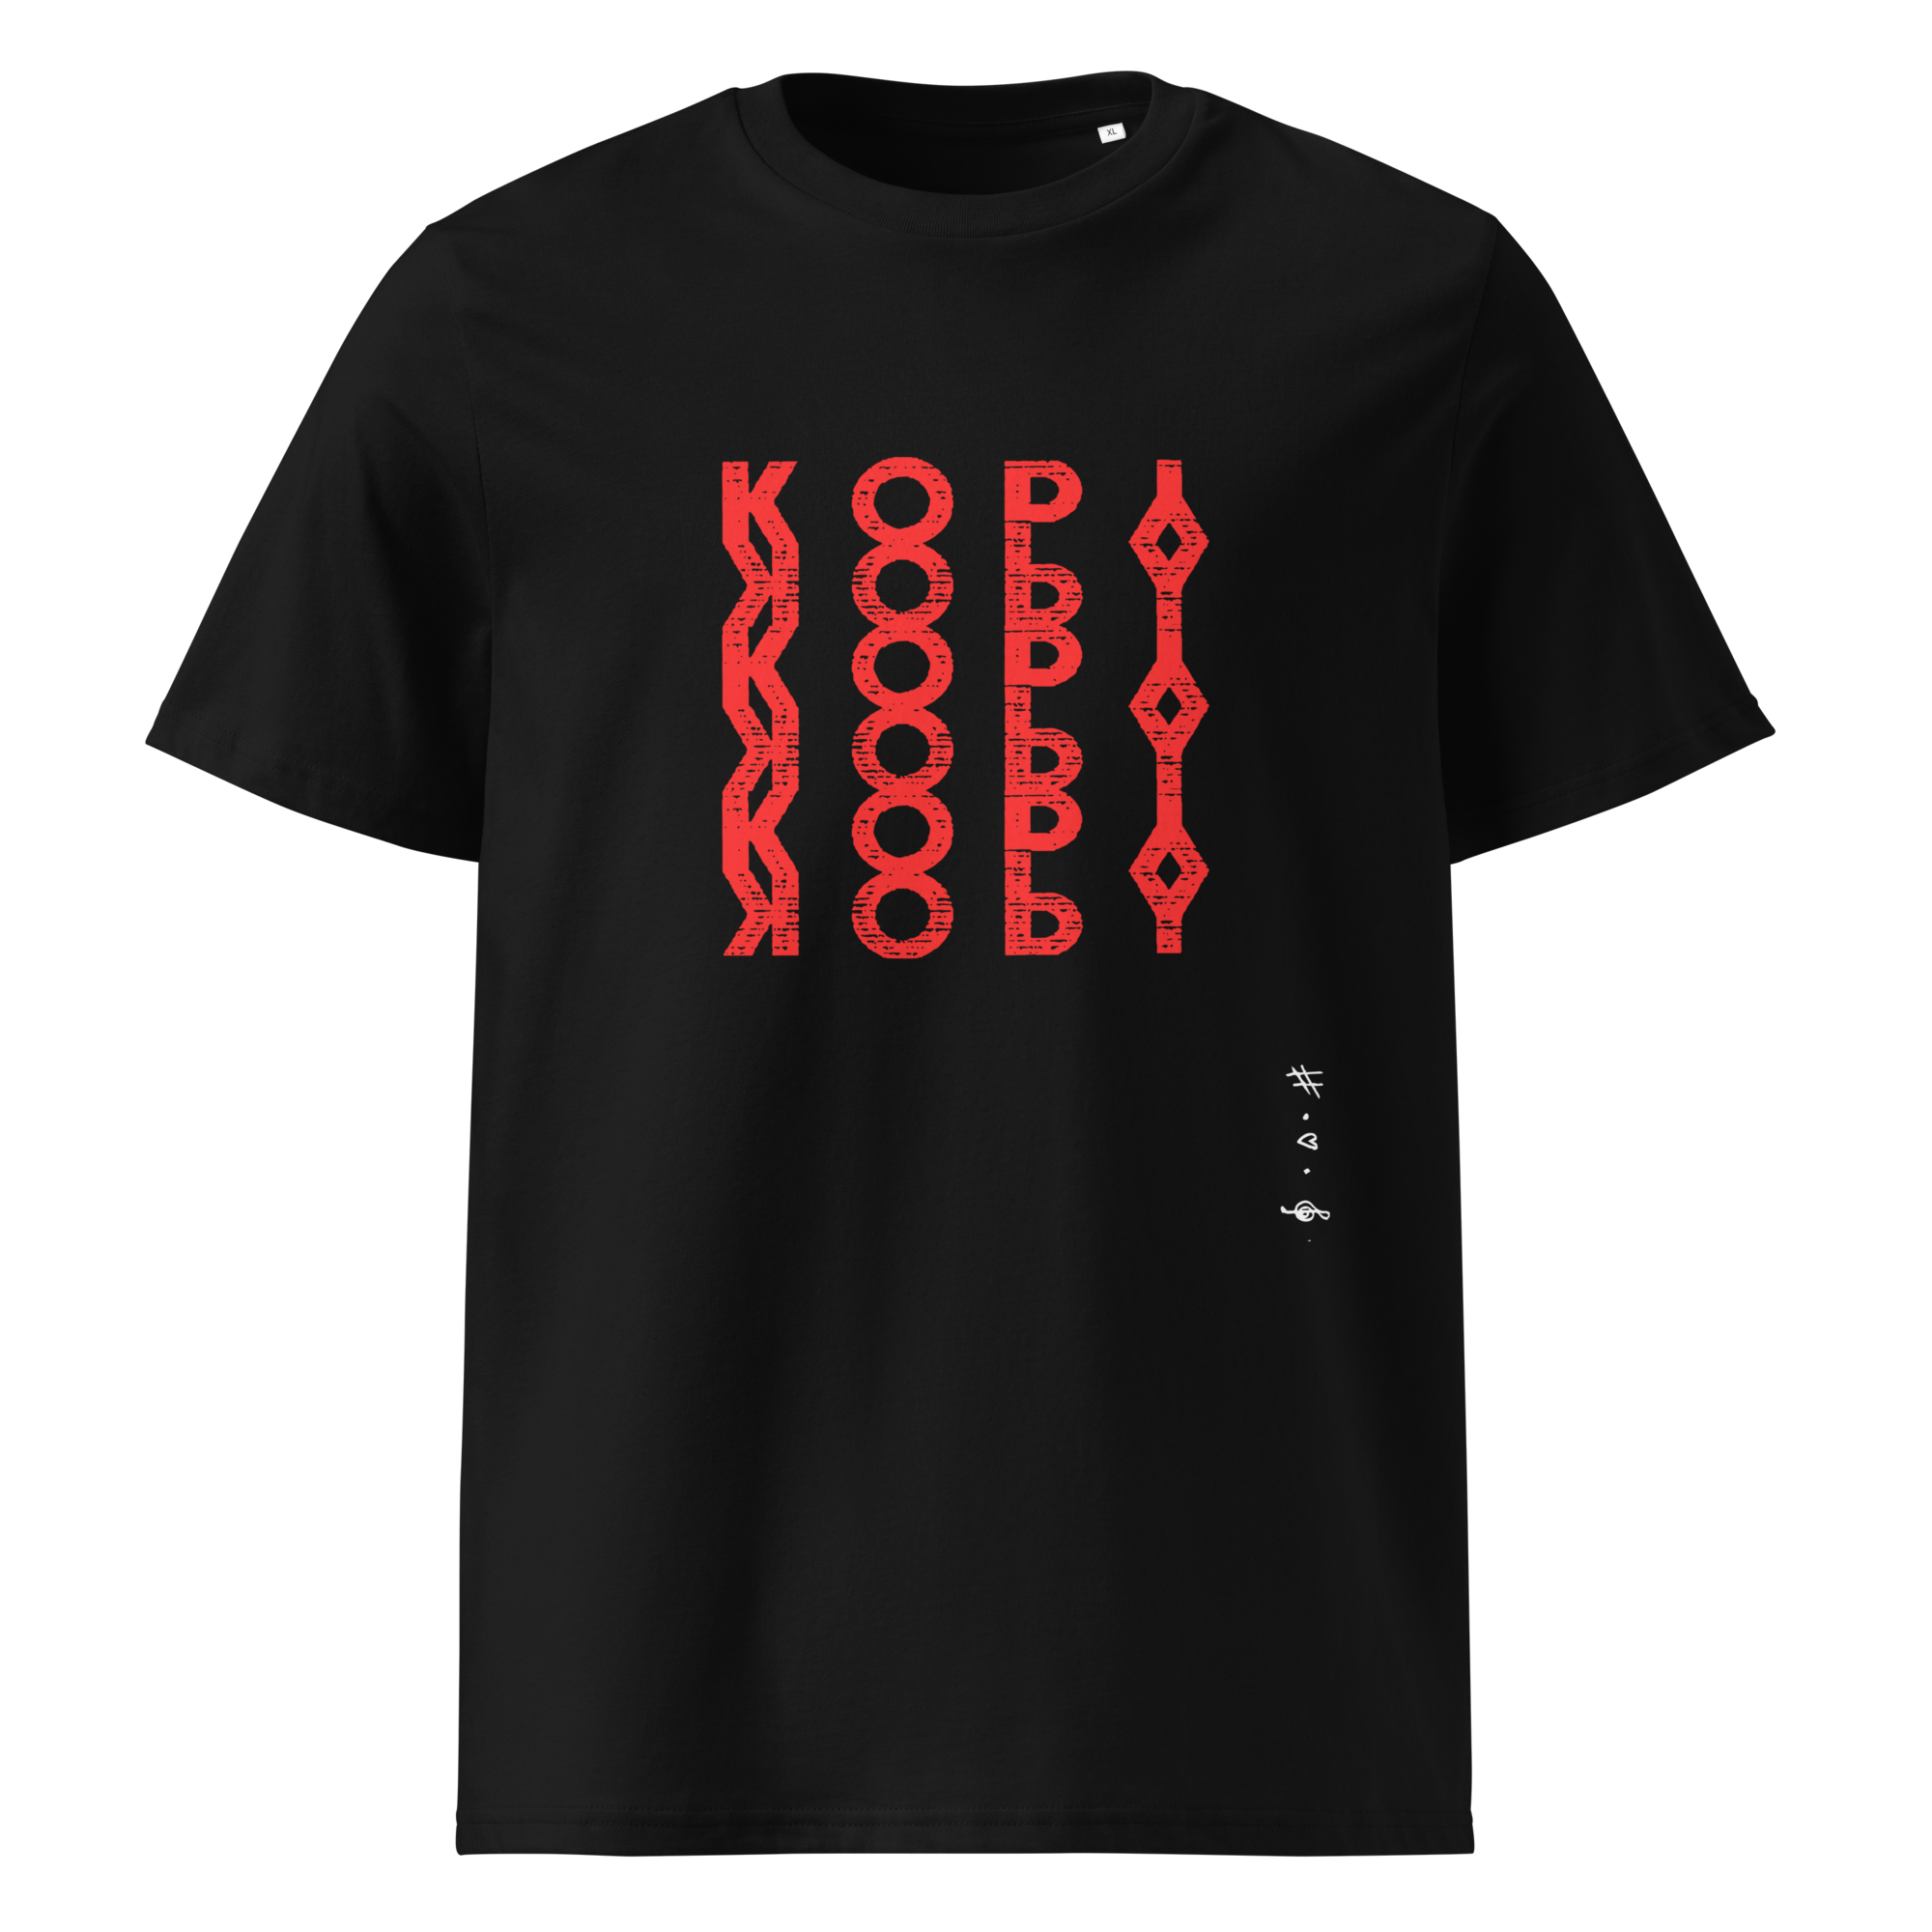 Kopy T-Shirt